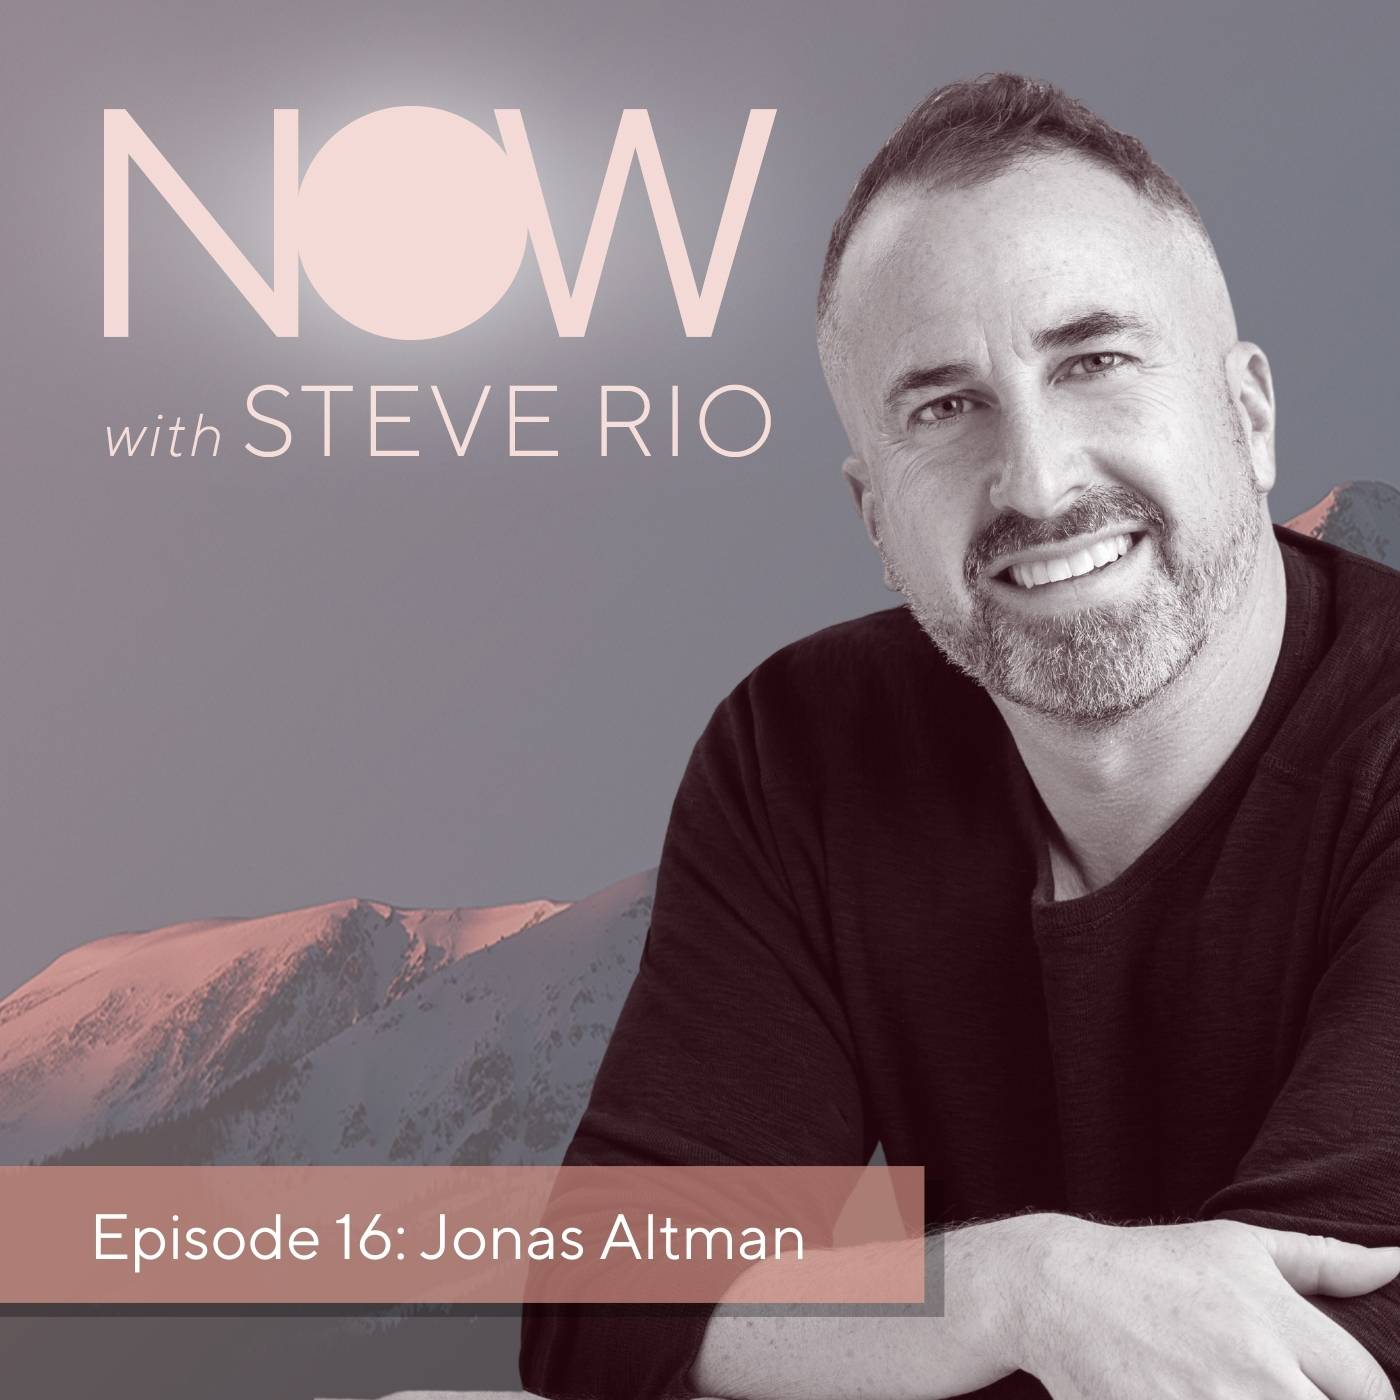 Jonas Altman on NOW with Steve Rio